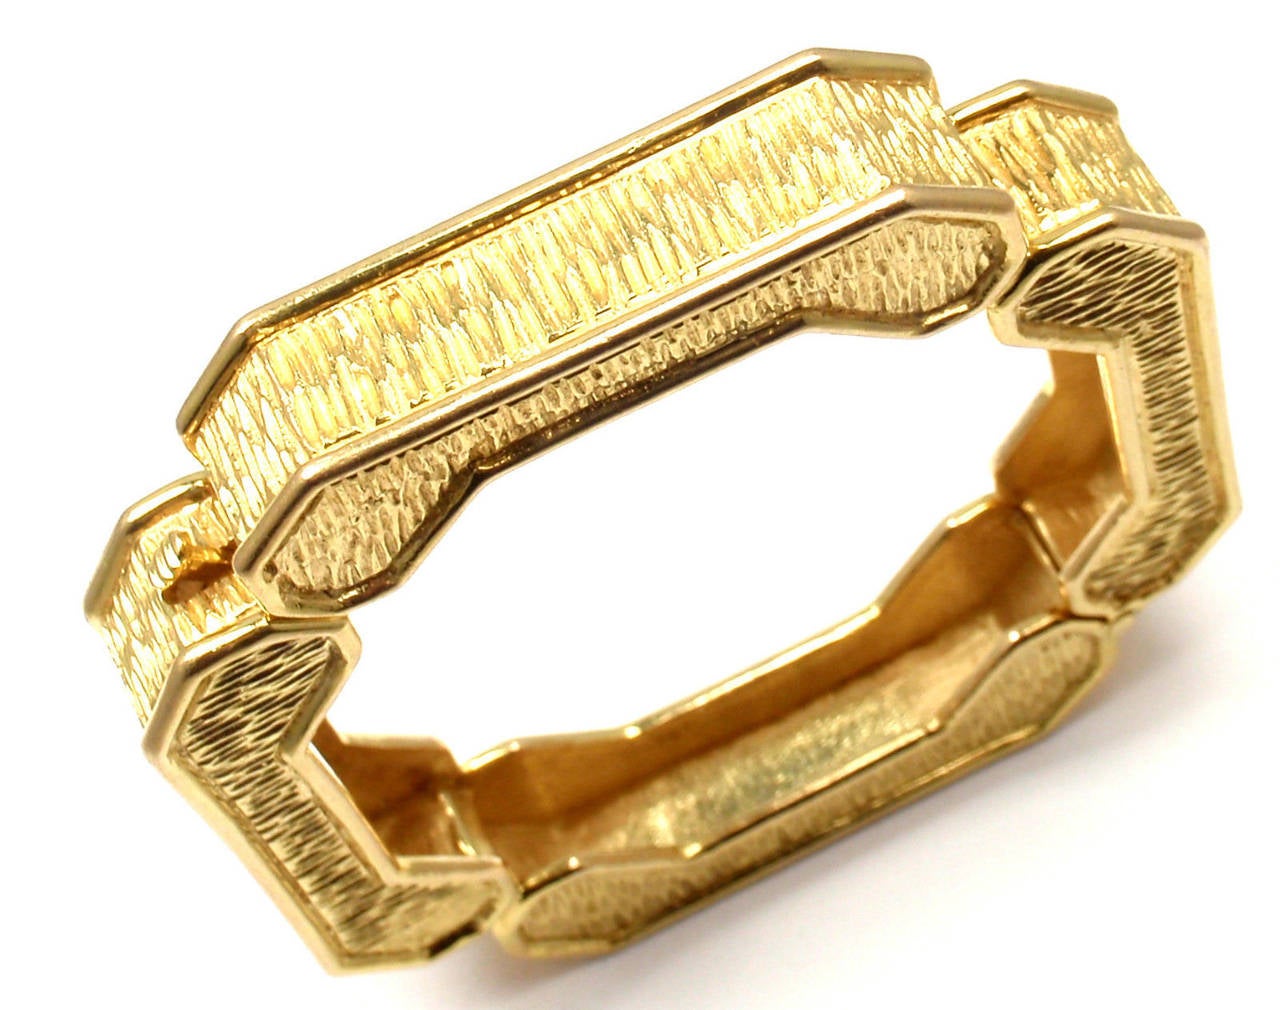 Zolotas Greece Yellow Gold Bangle Bracelet 2